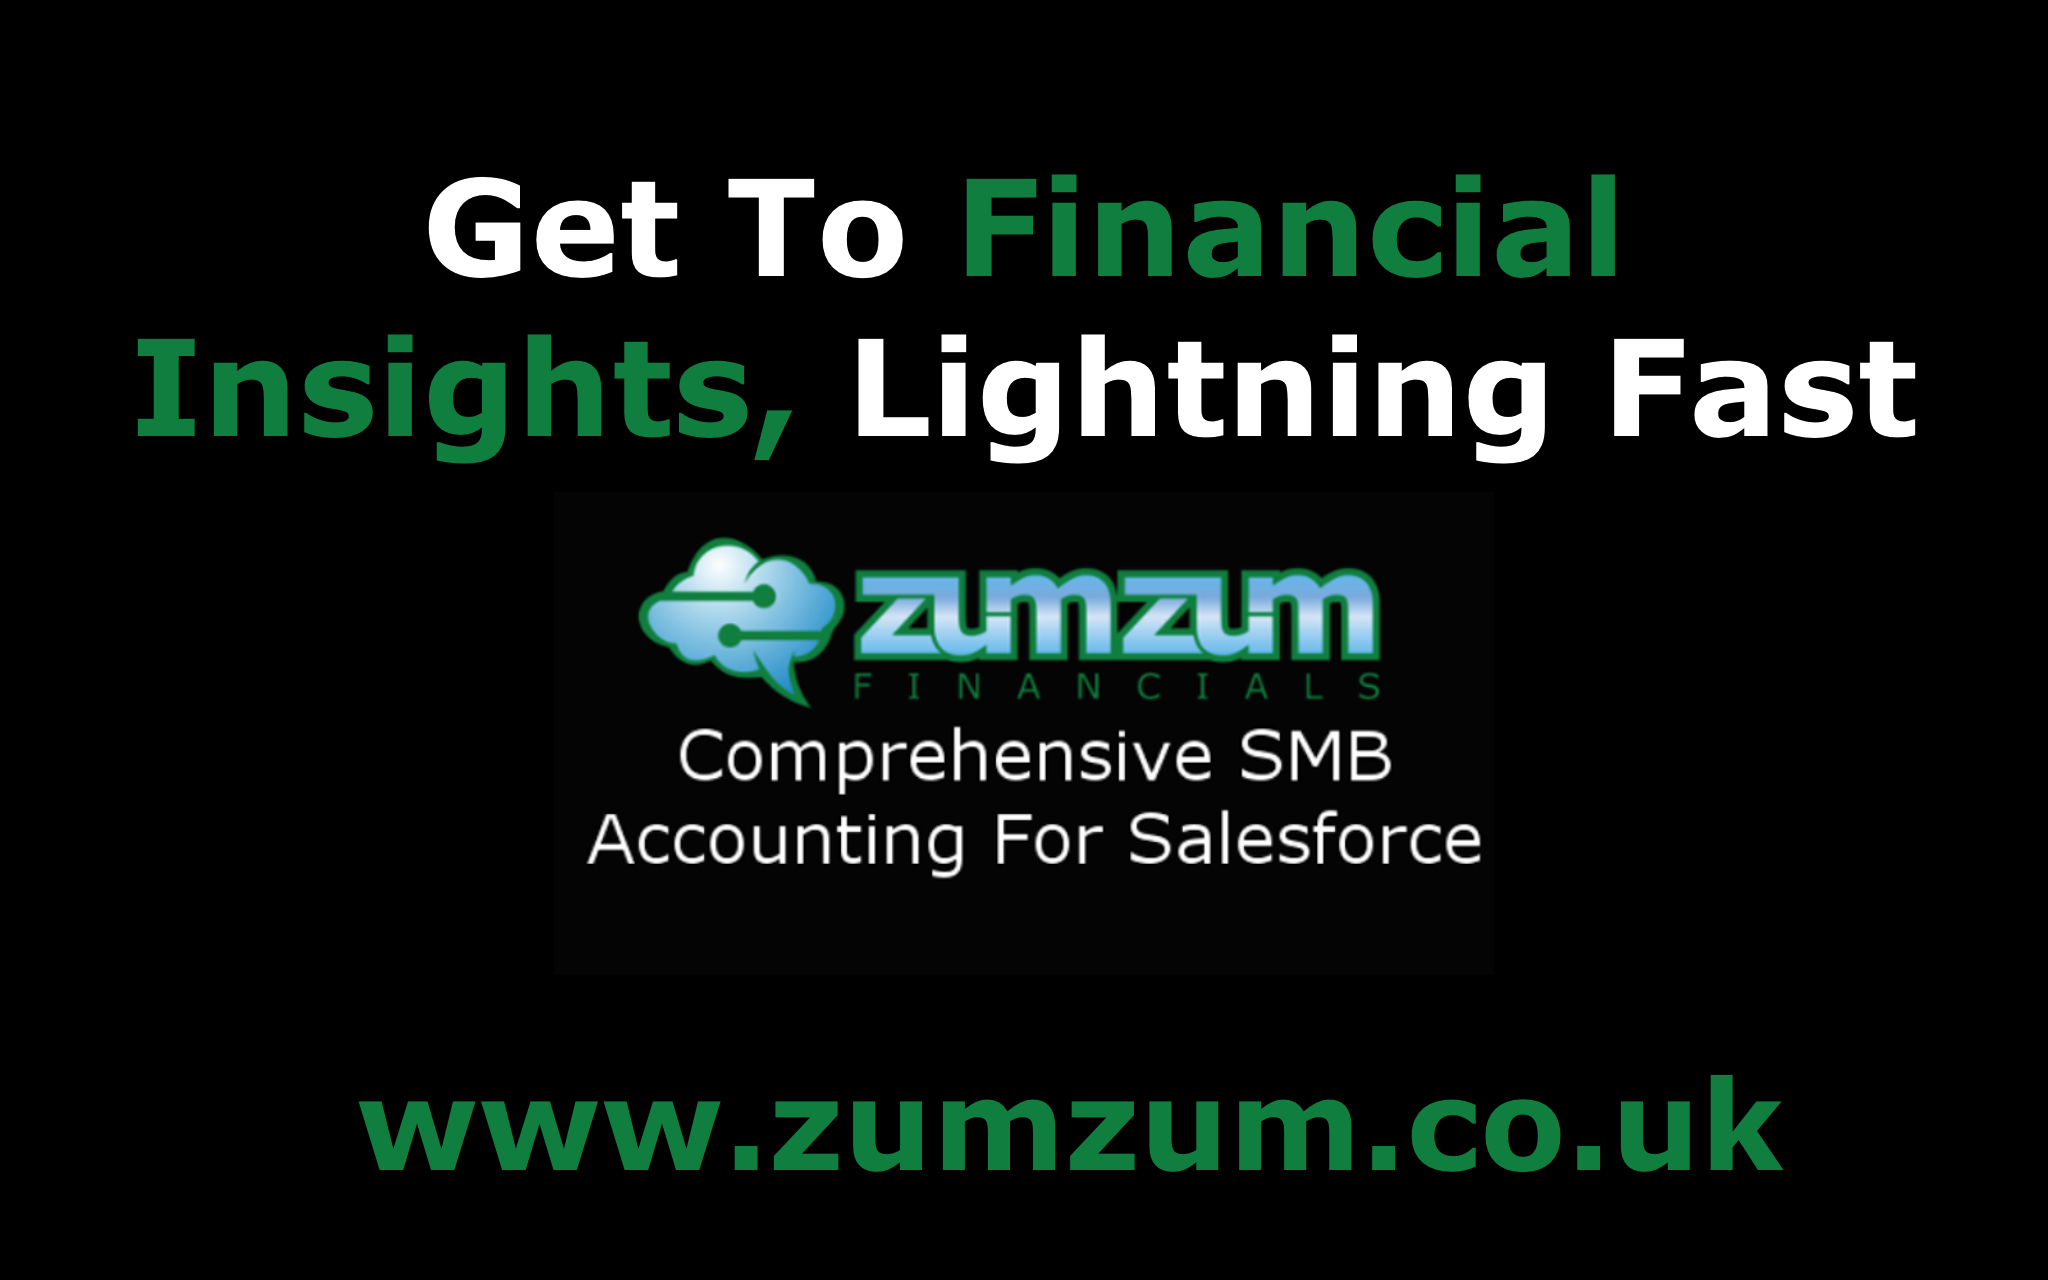 Accounts Receivable Report For Zumzum Financials